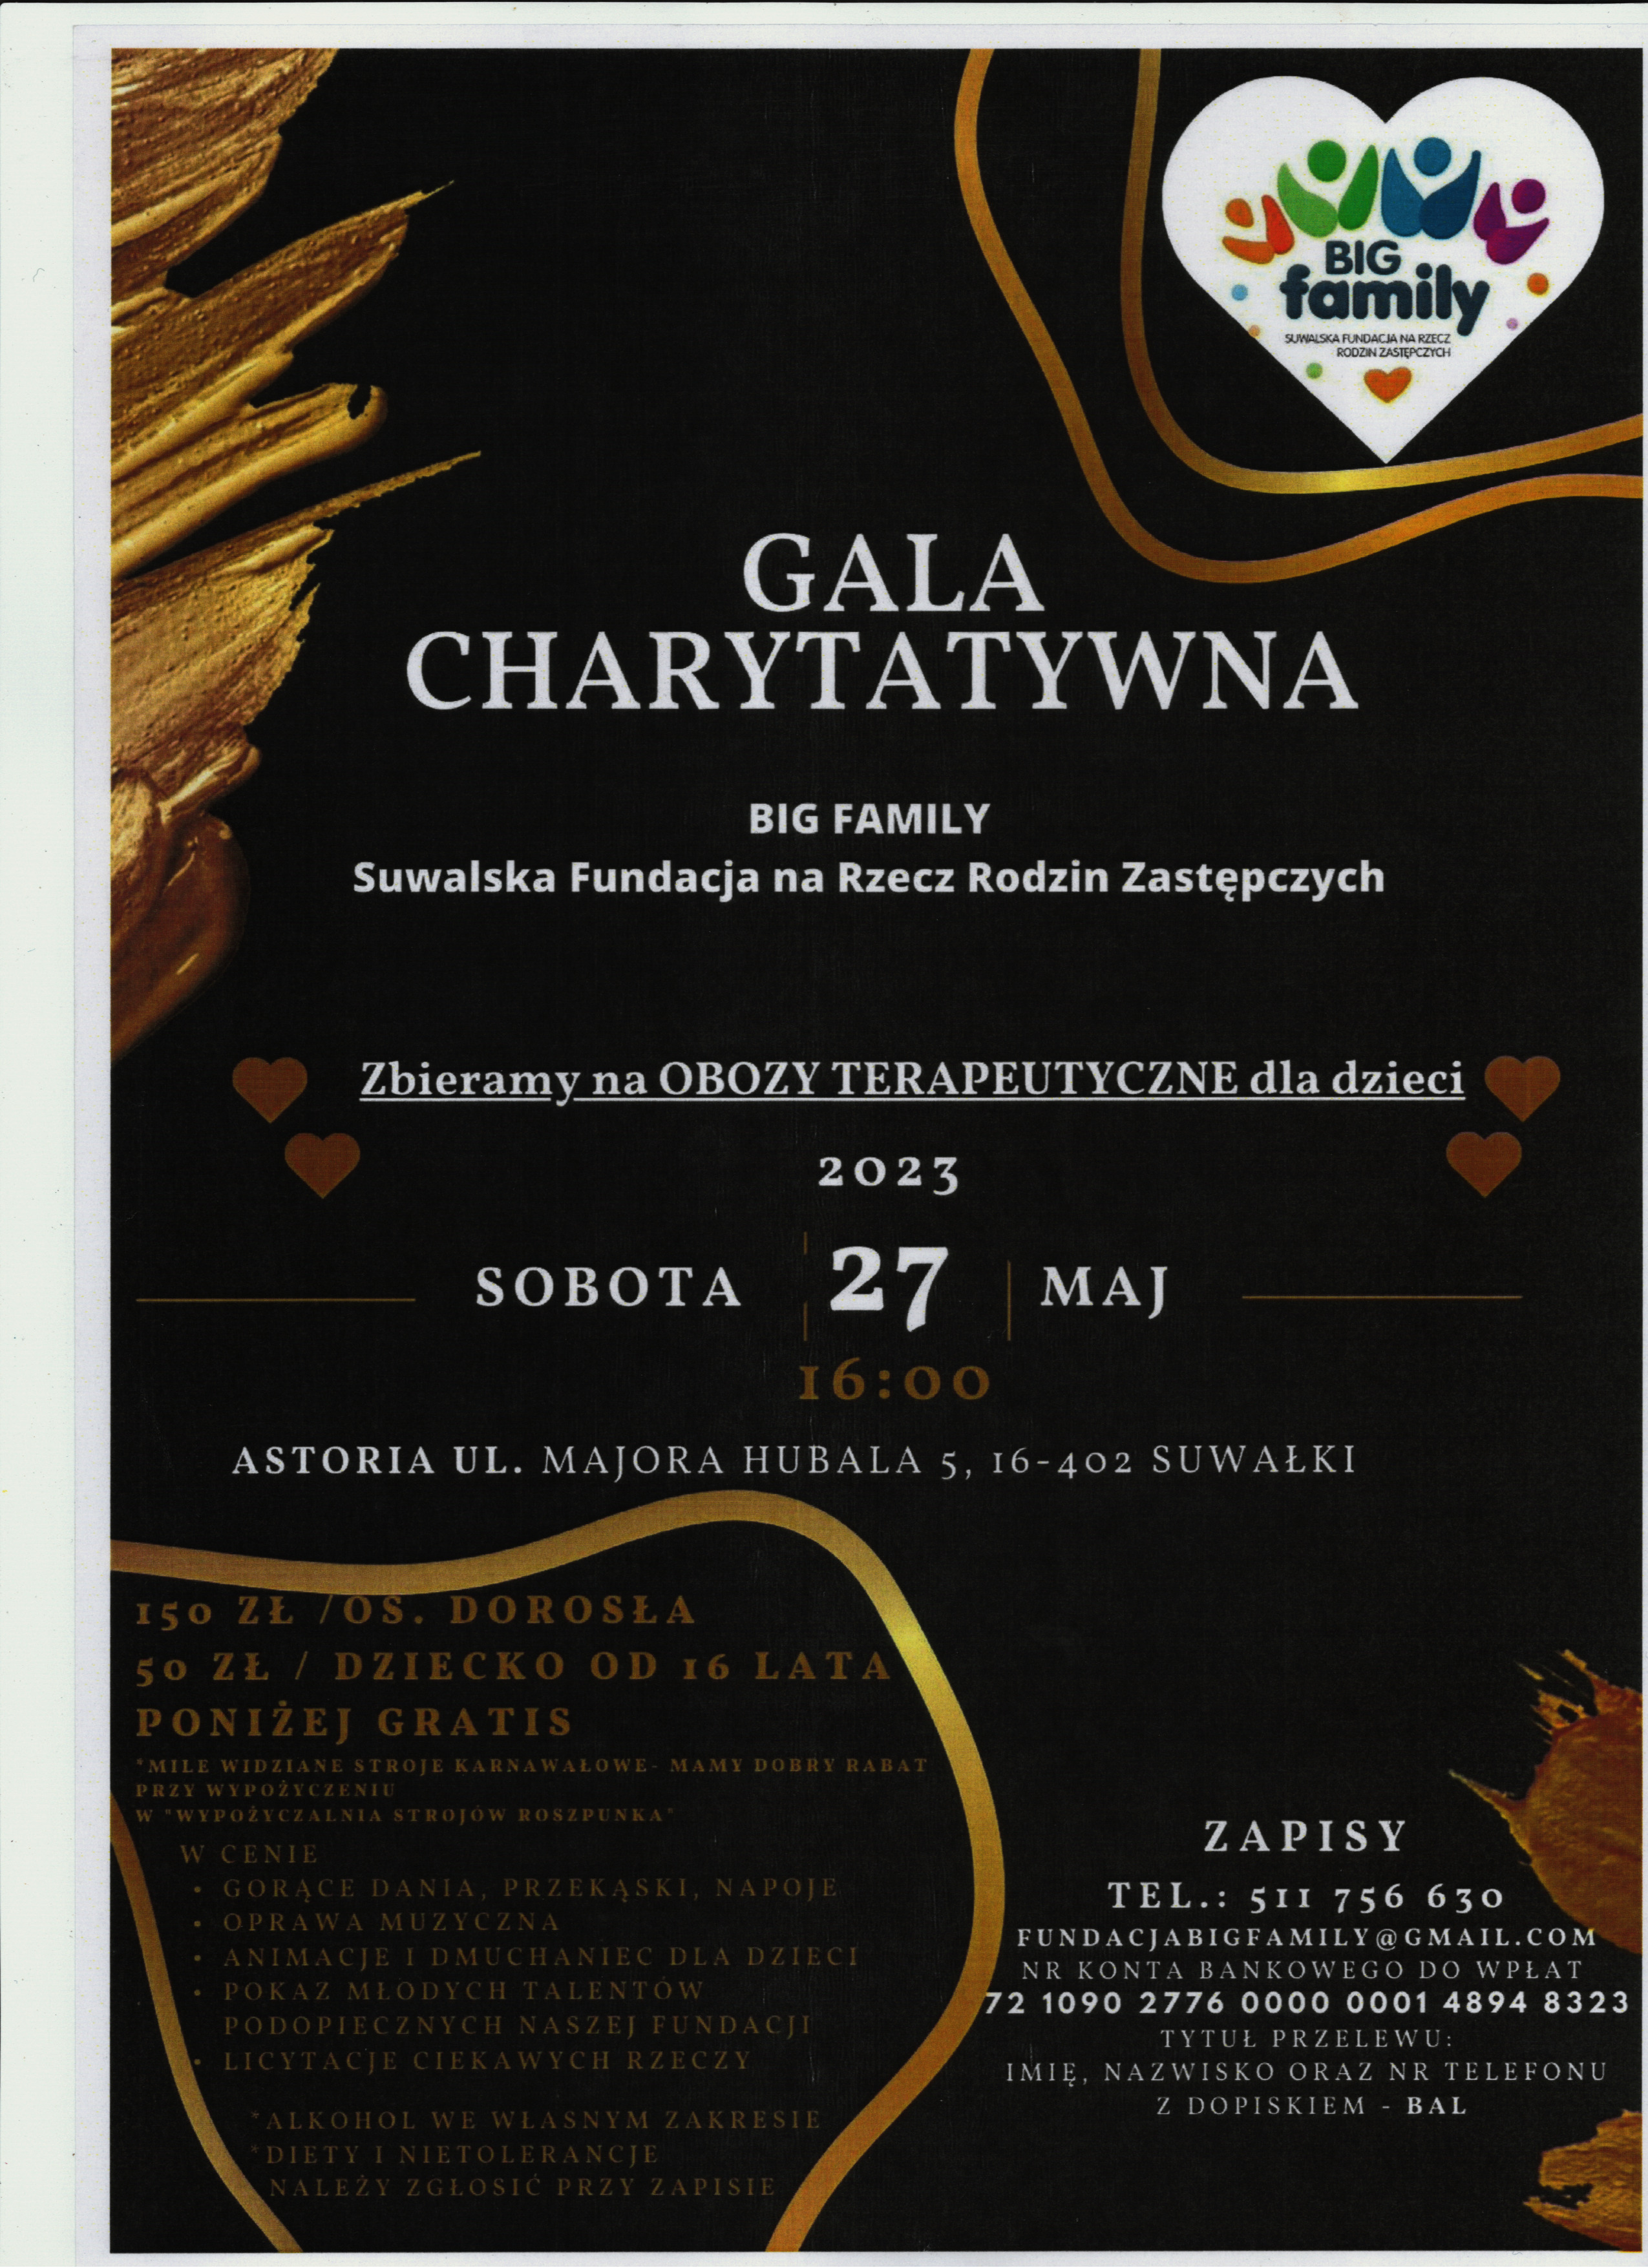 Gala Charytatywna